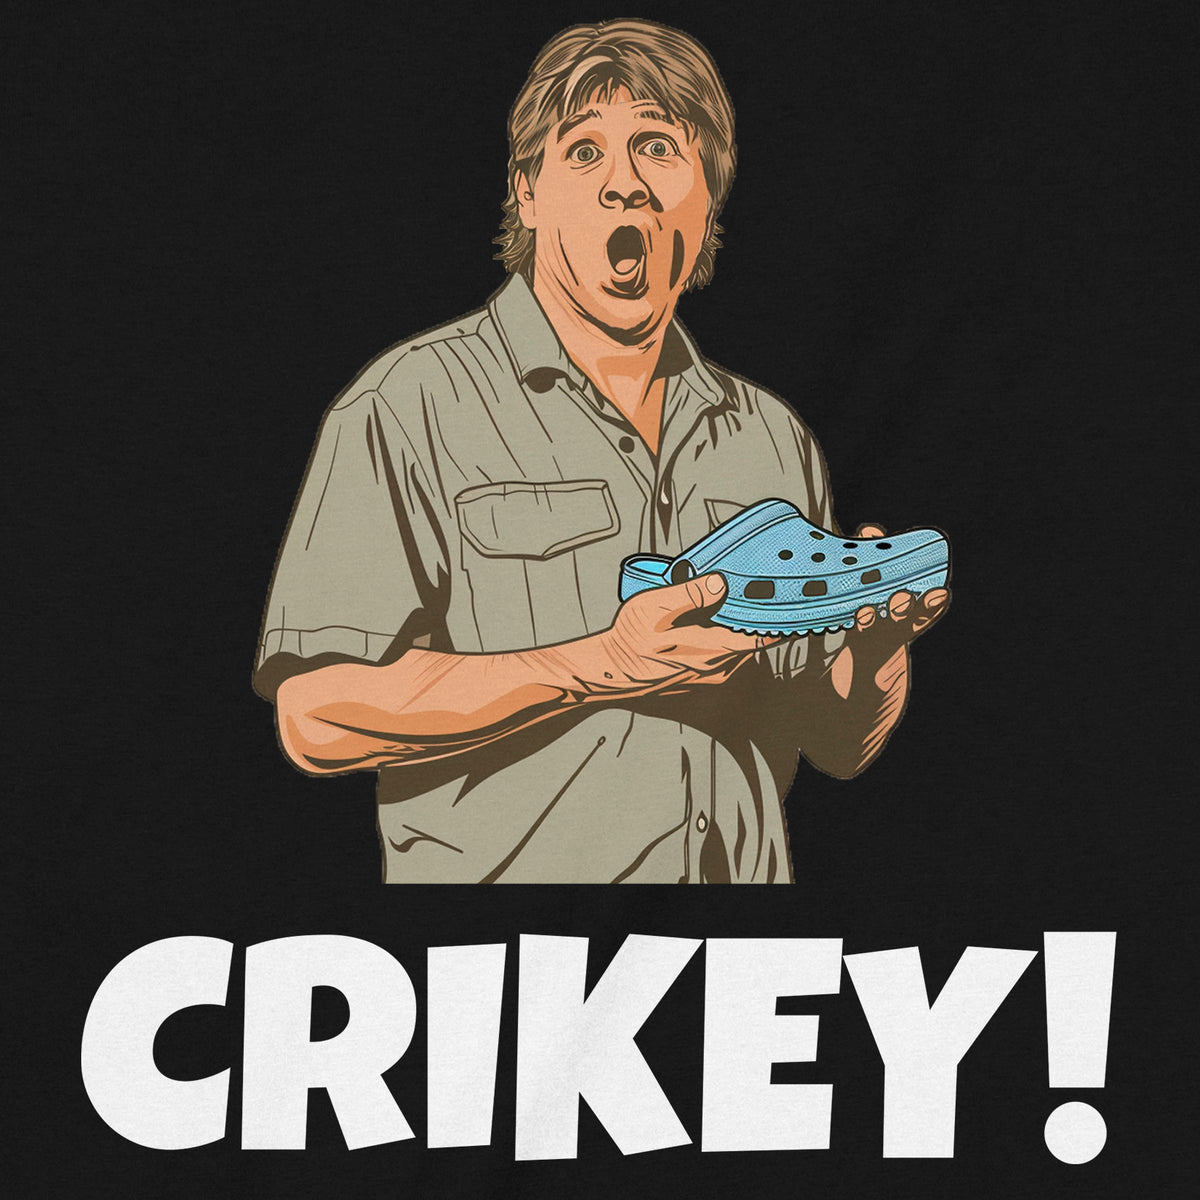 "Crikey!" Premium Midweight Ringspun Cotton T-Shirt - Mens/Womens Fits